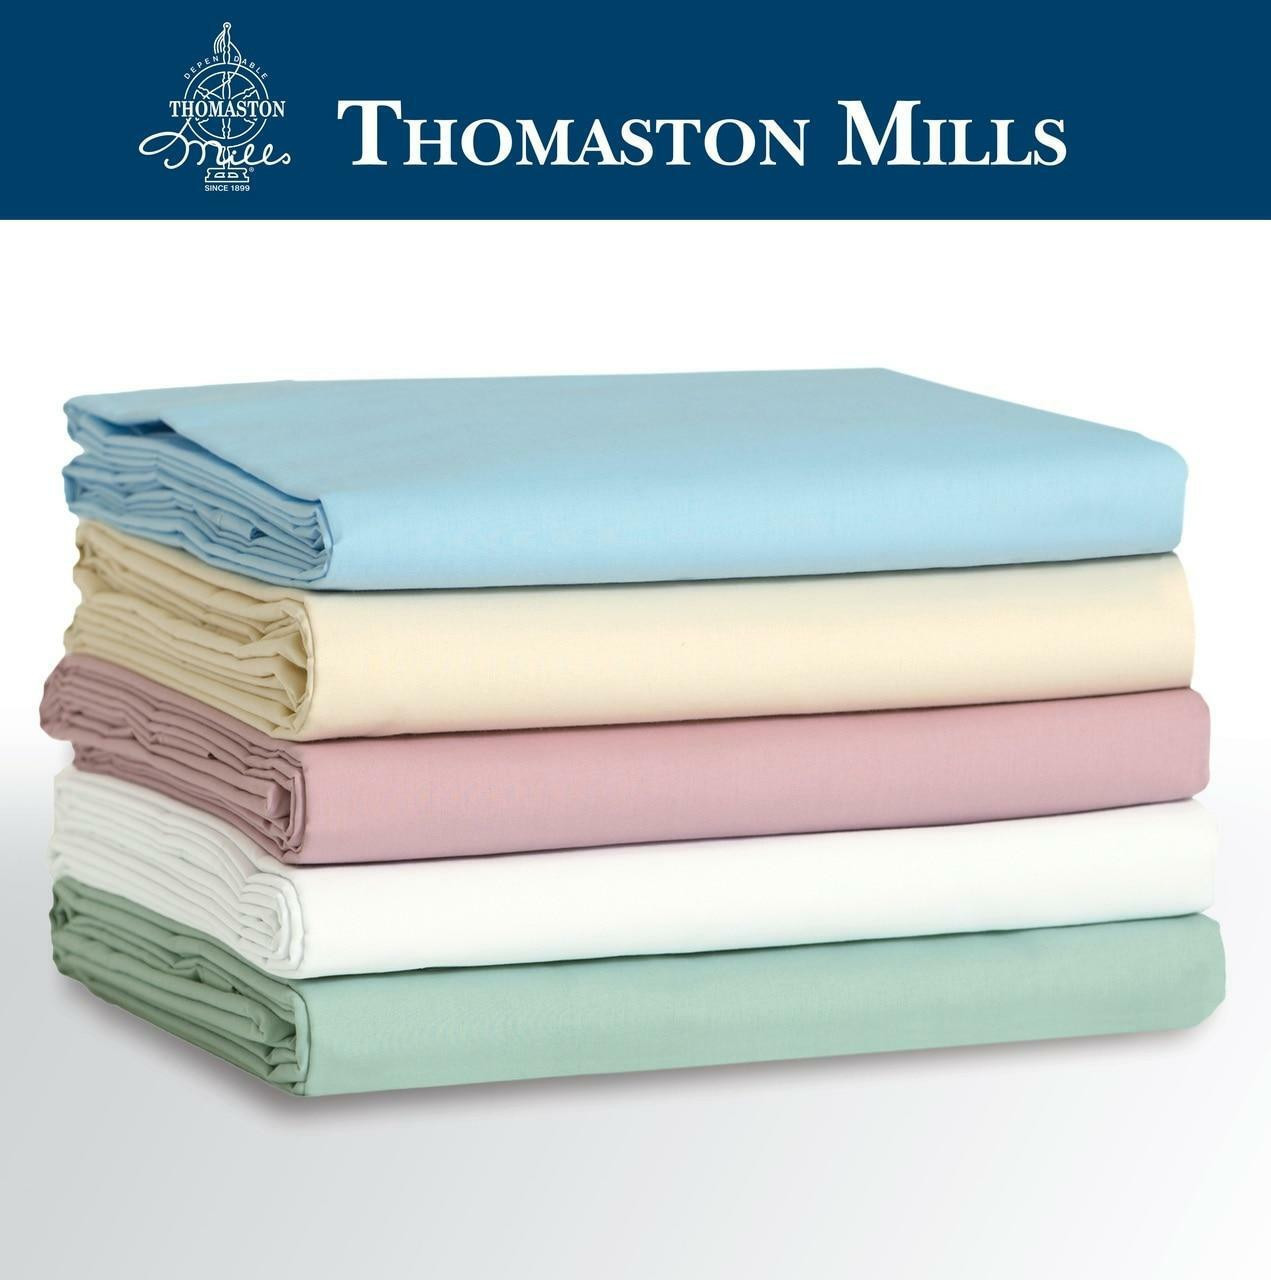 THOMASTON MILLS Thomaston Mills T180 - All Colors and Sizes